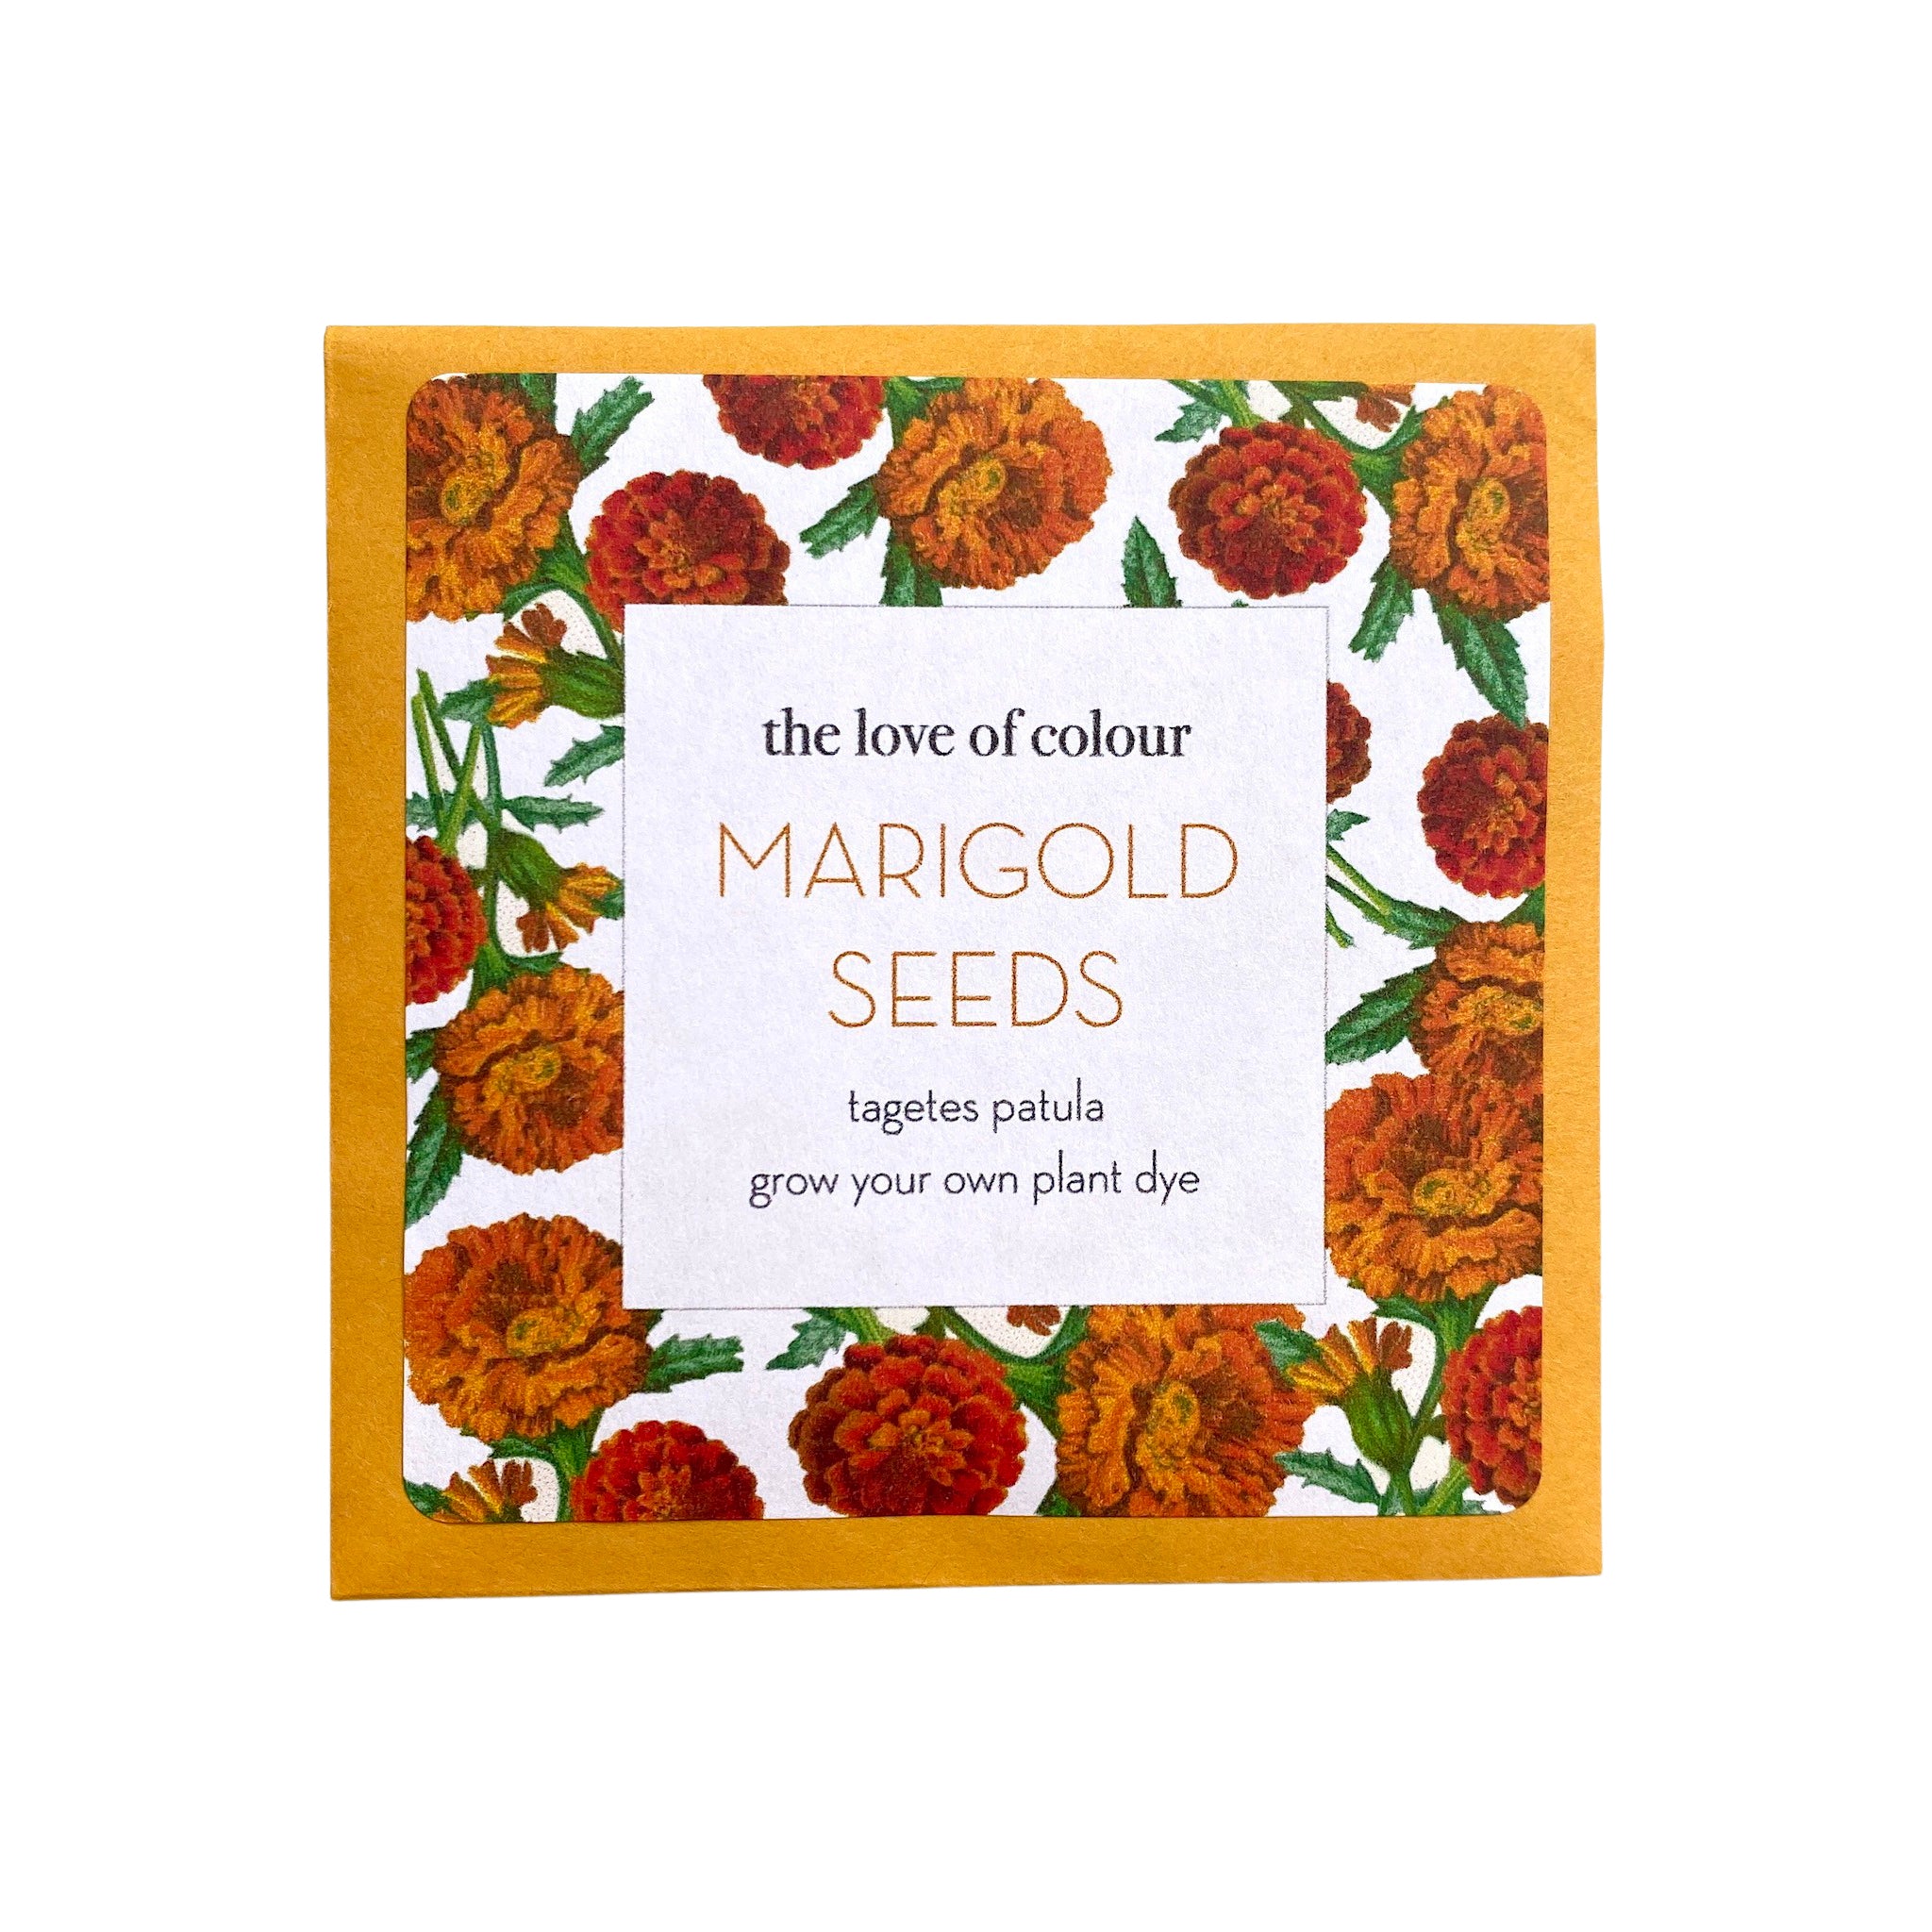 Marigold seeds - tagetes patula